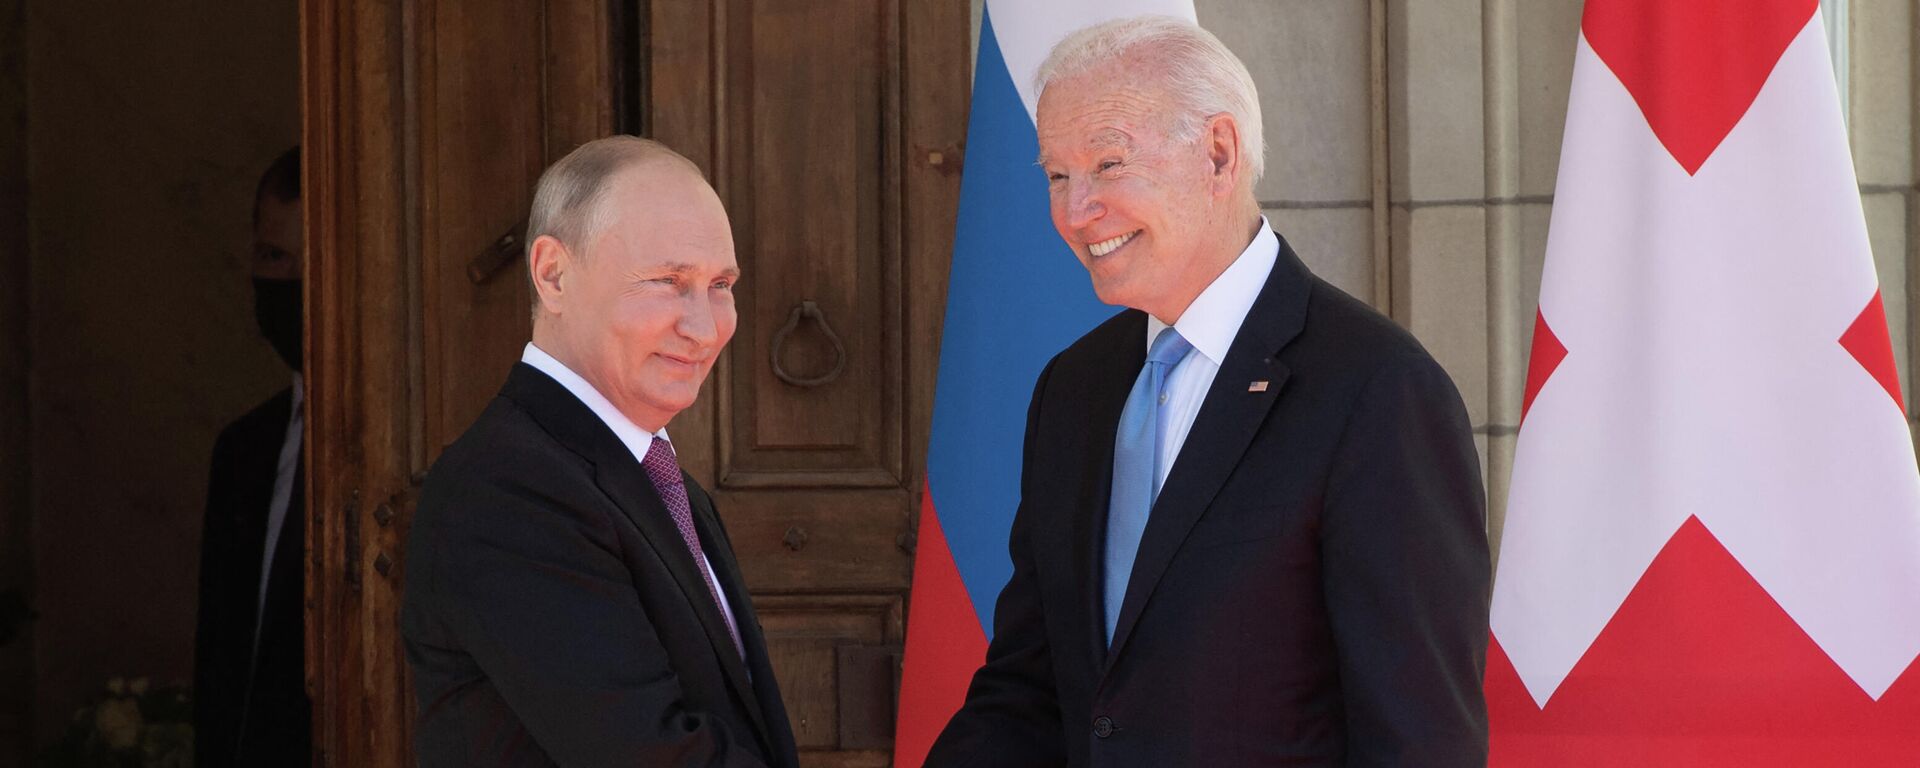 Президент США Джо Байден (справа) и президент России Владимир Путин - Sputnik Таджикистан, 1920, 16.06.2021